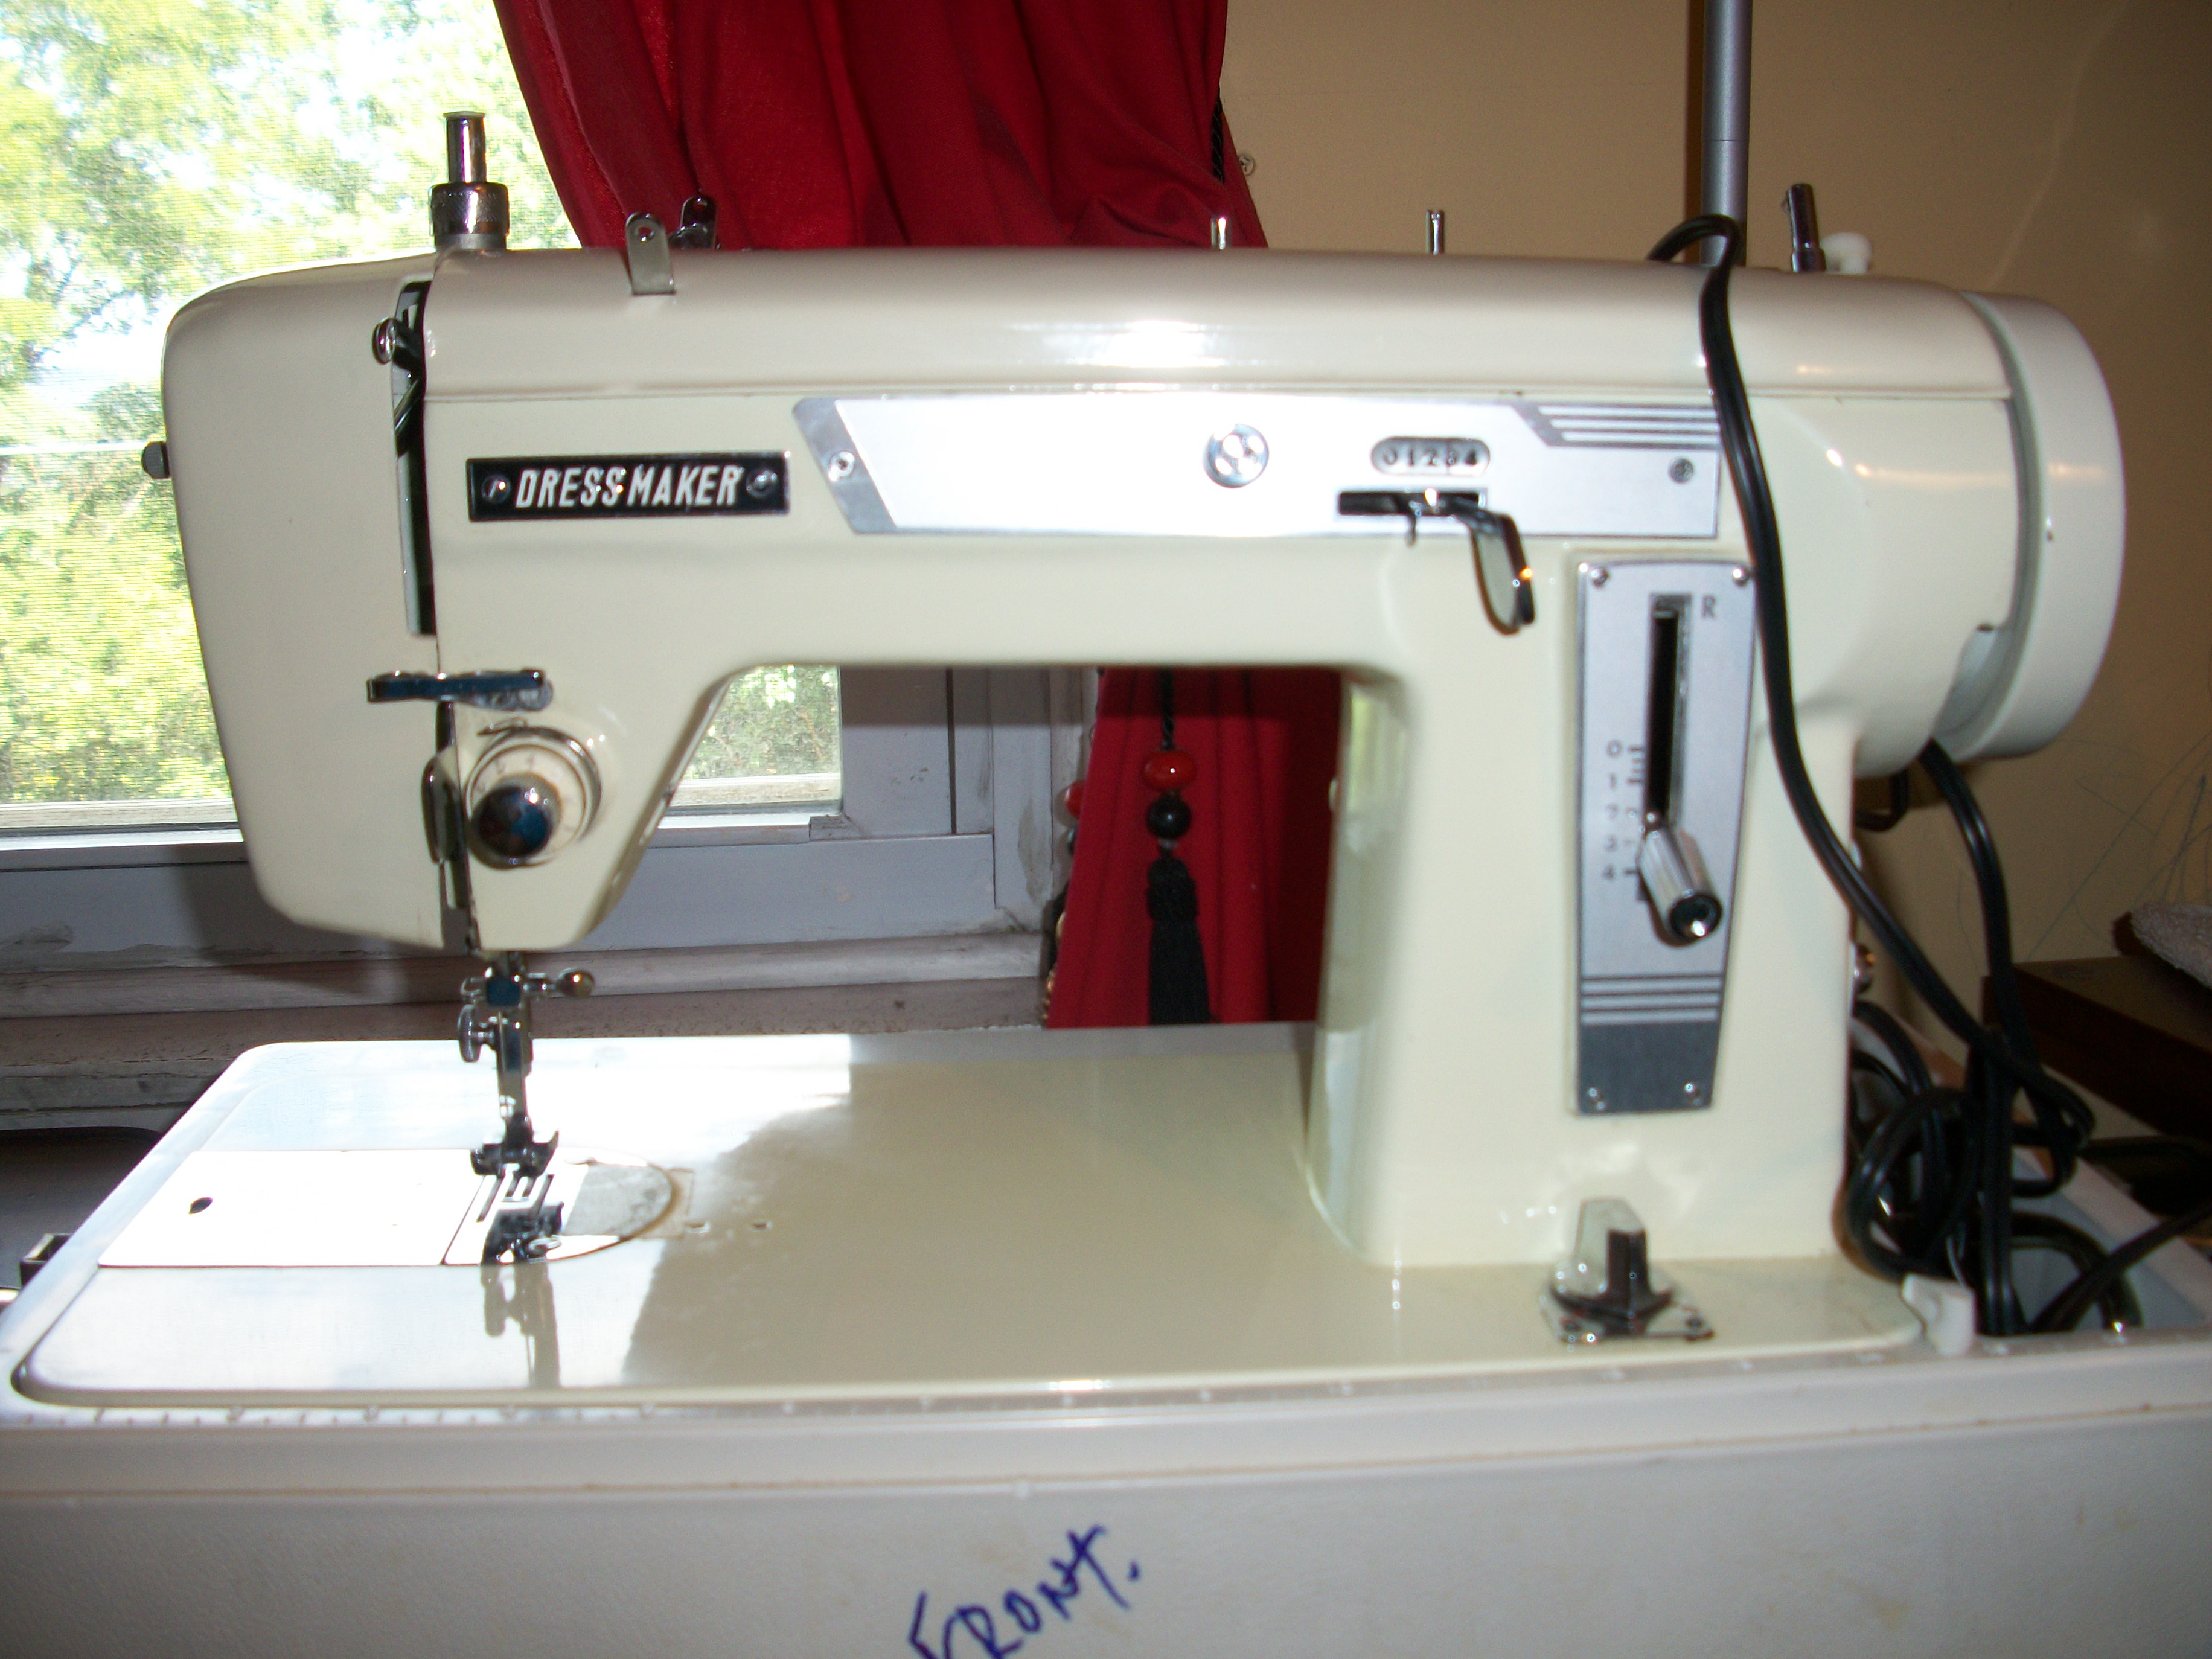 free dressmaker sewing machine manual